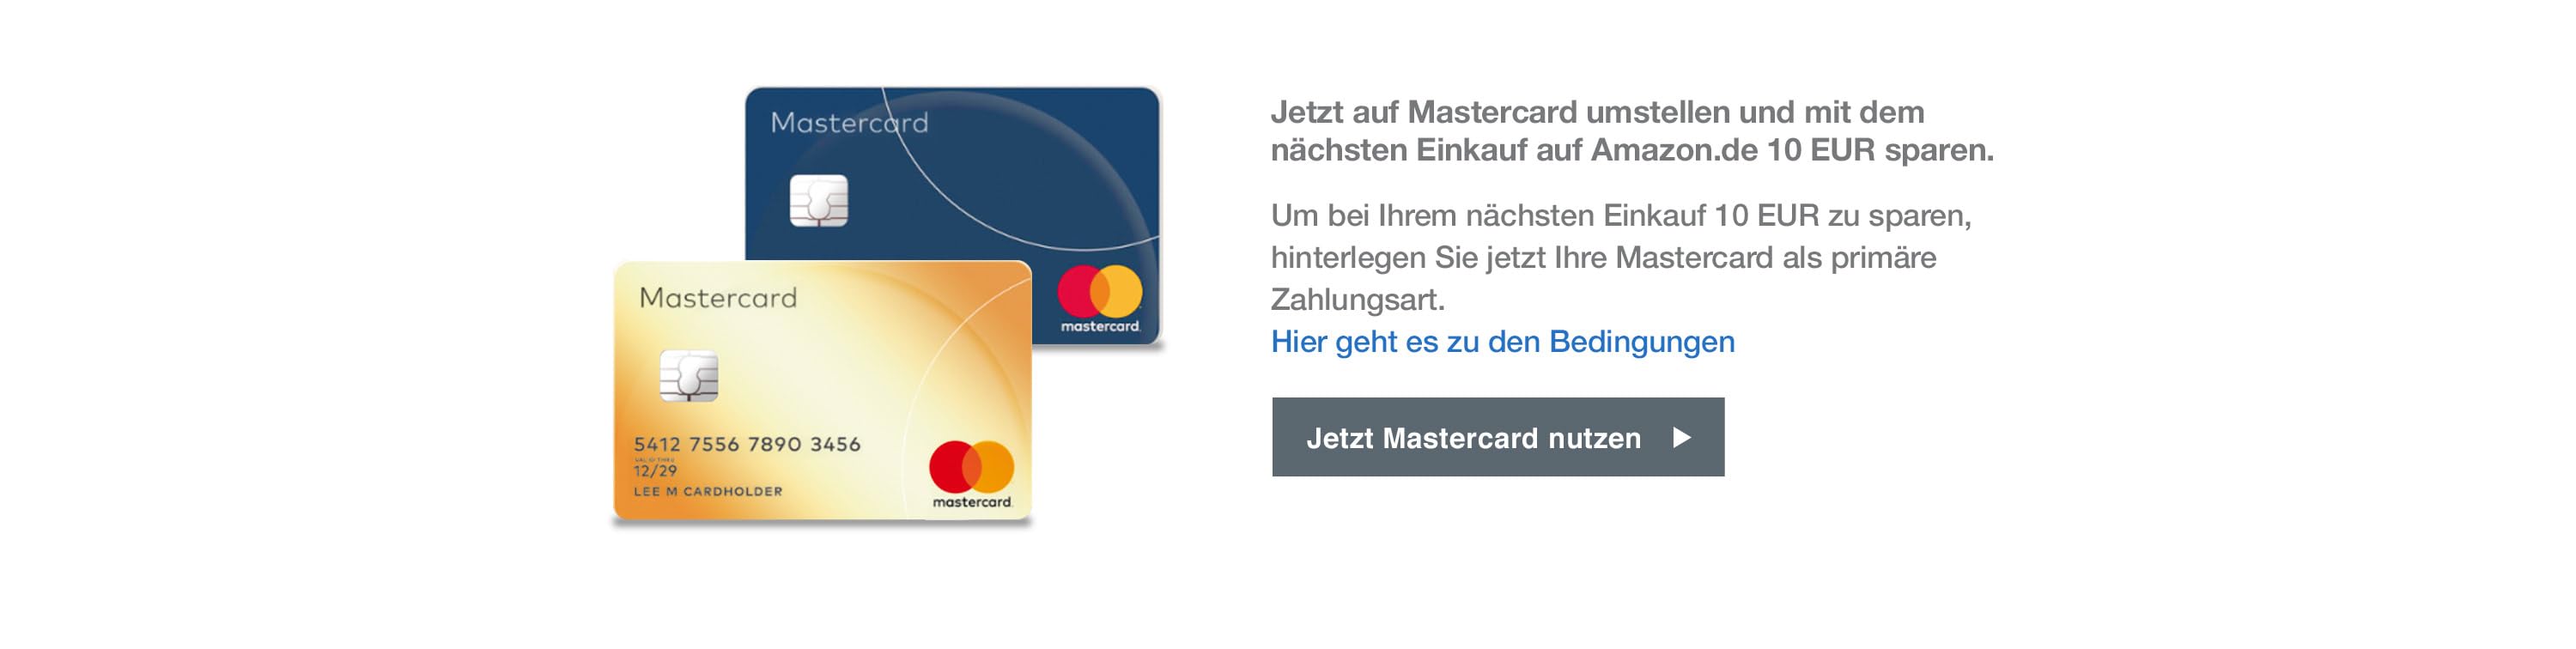 Mastercard-workaround-desktop4-bb0ac06f-0ce7-4242-81a7-17921a50d269._QL85_.jpg